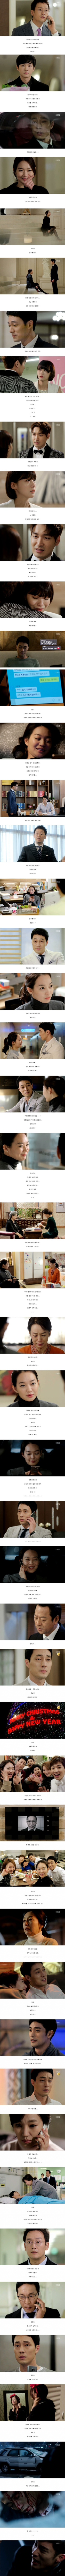 episode 12 captures for the Korean drama 'Oh My Venus'